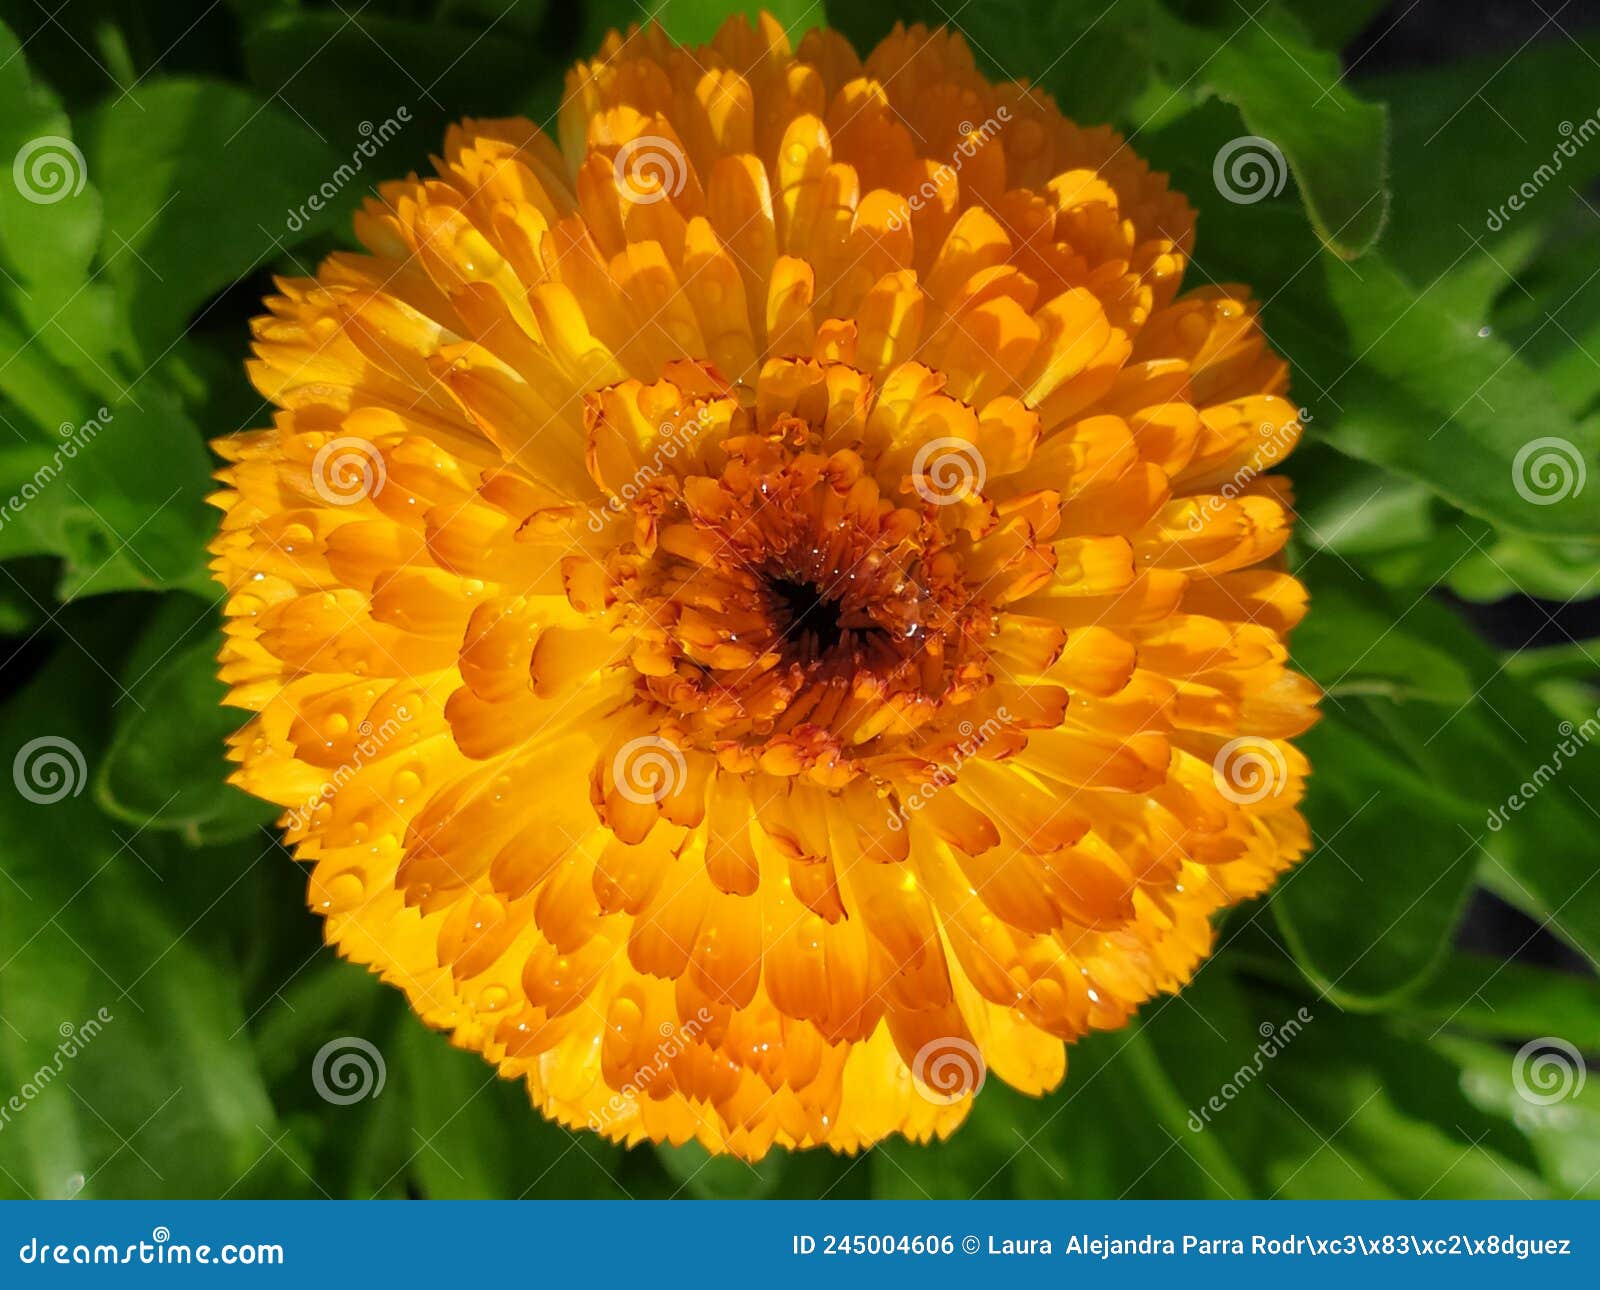 a single marigold flower orange freshly watered. una sola flor de calÃÂ©ndula color anaranjado, reciÃÂ©n regada.